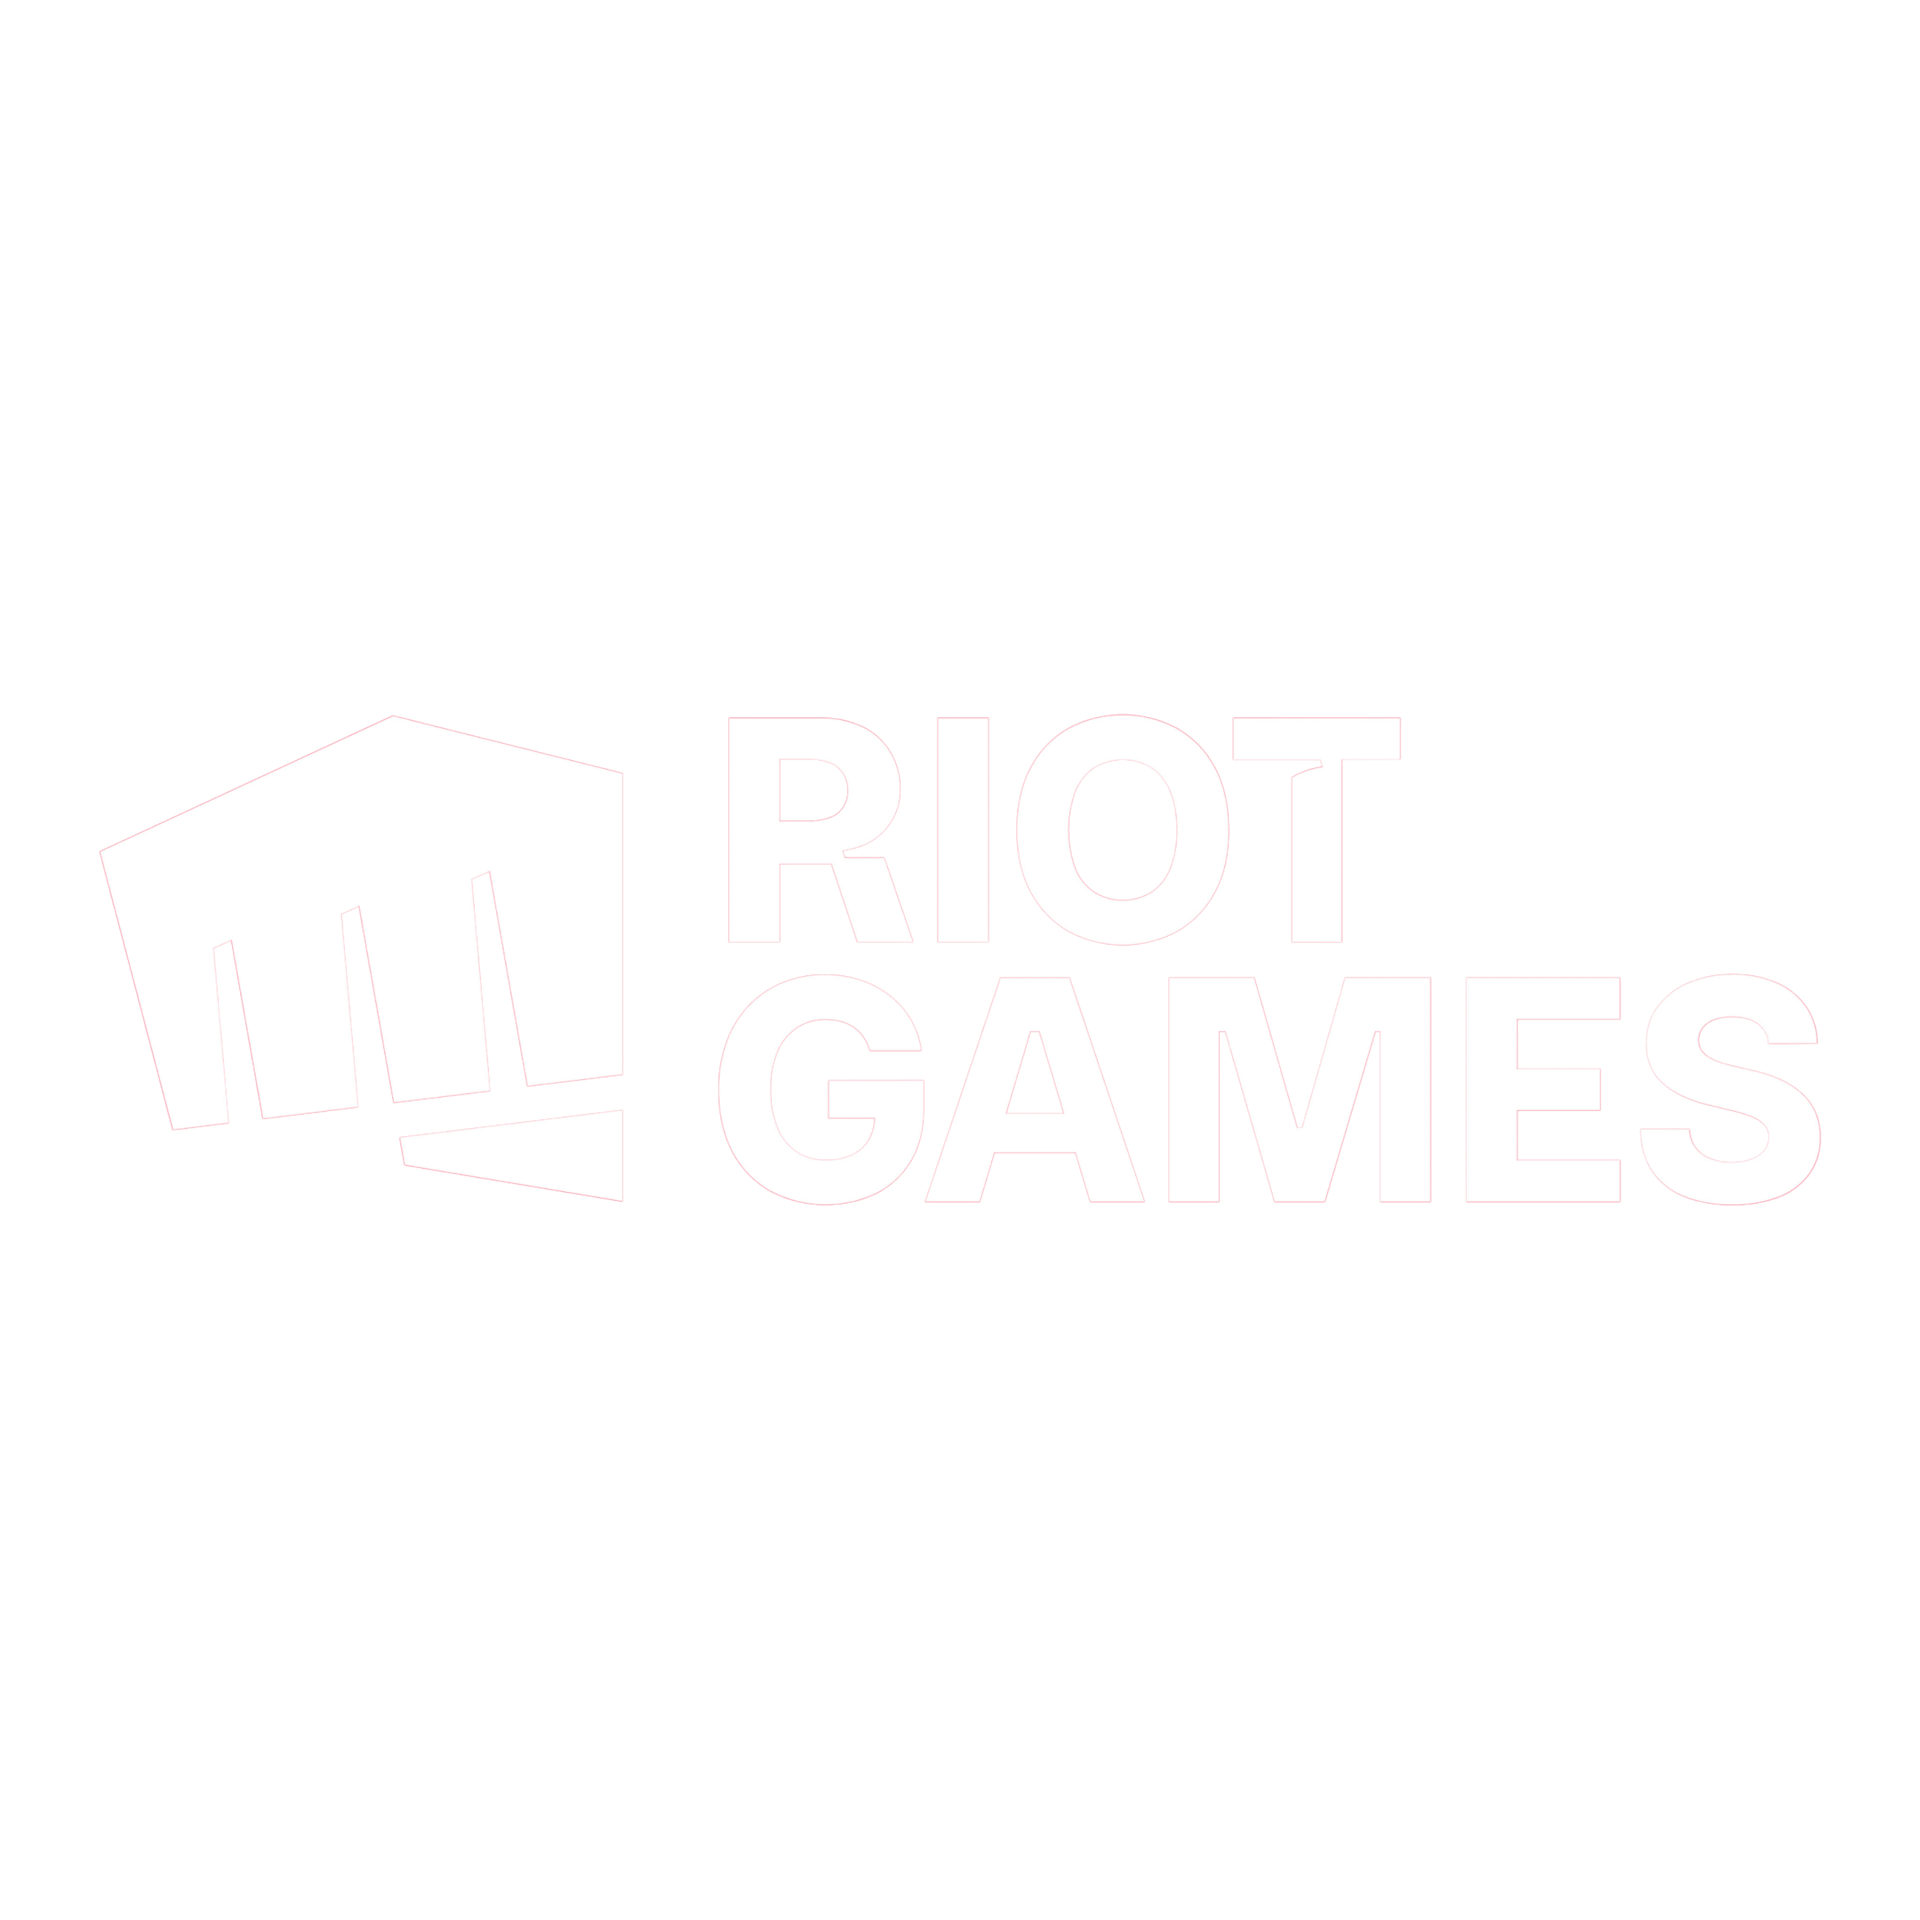 Emerge Riot Games Entertainment Media Technology capital VC venture capital Marc Merrill